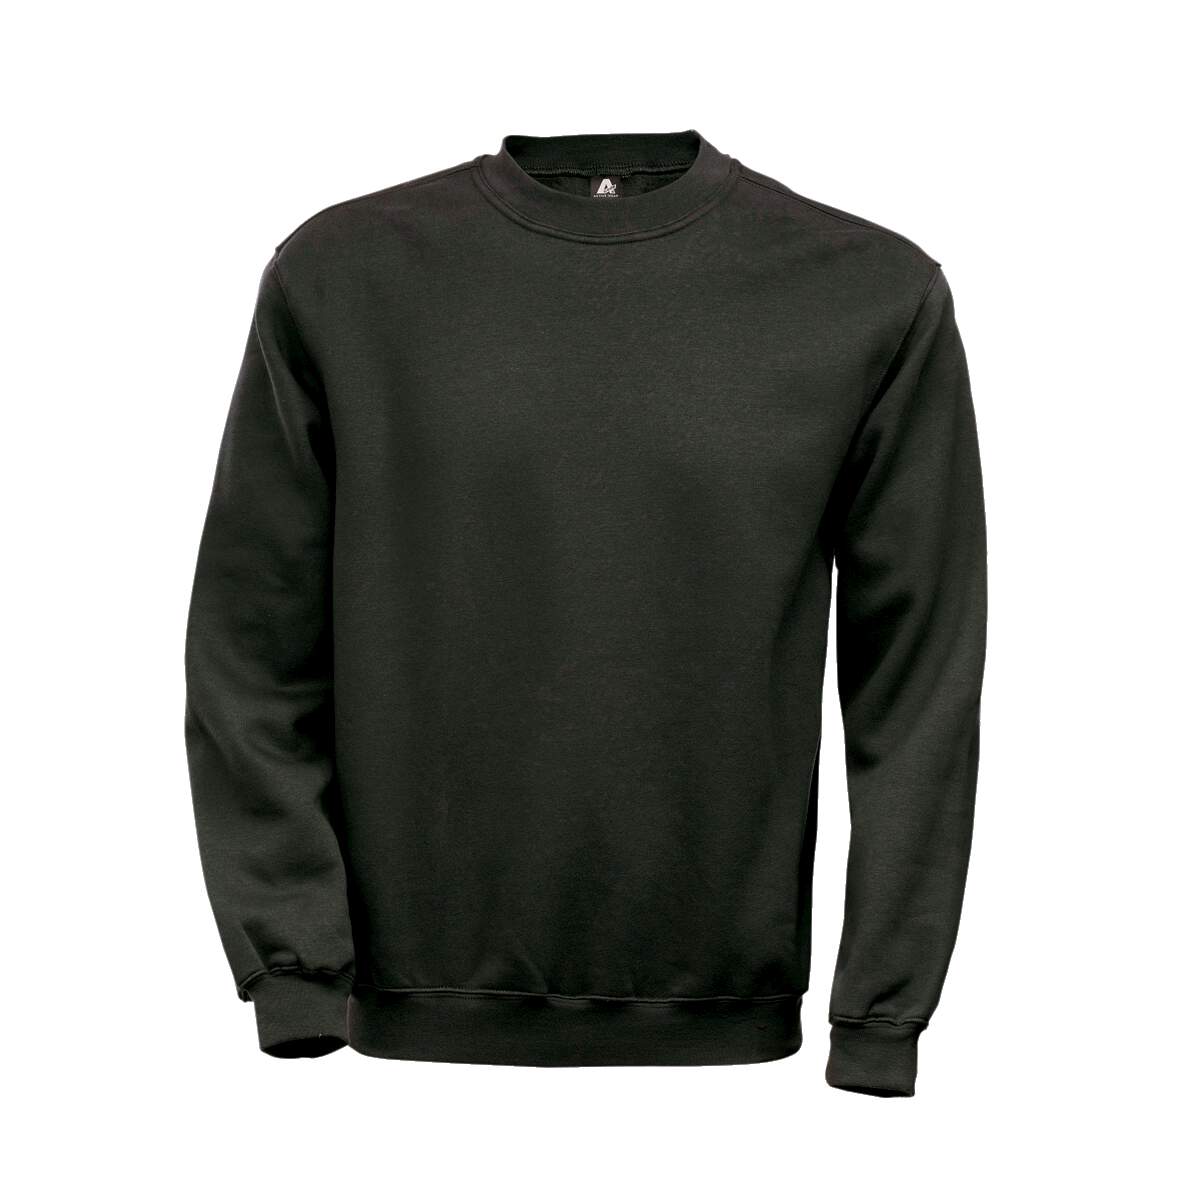 1181287 - Sweatshirt schwarz 100225